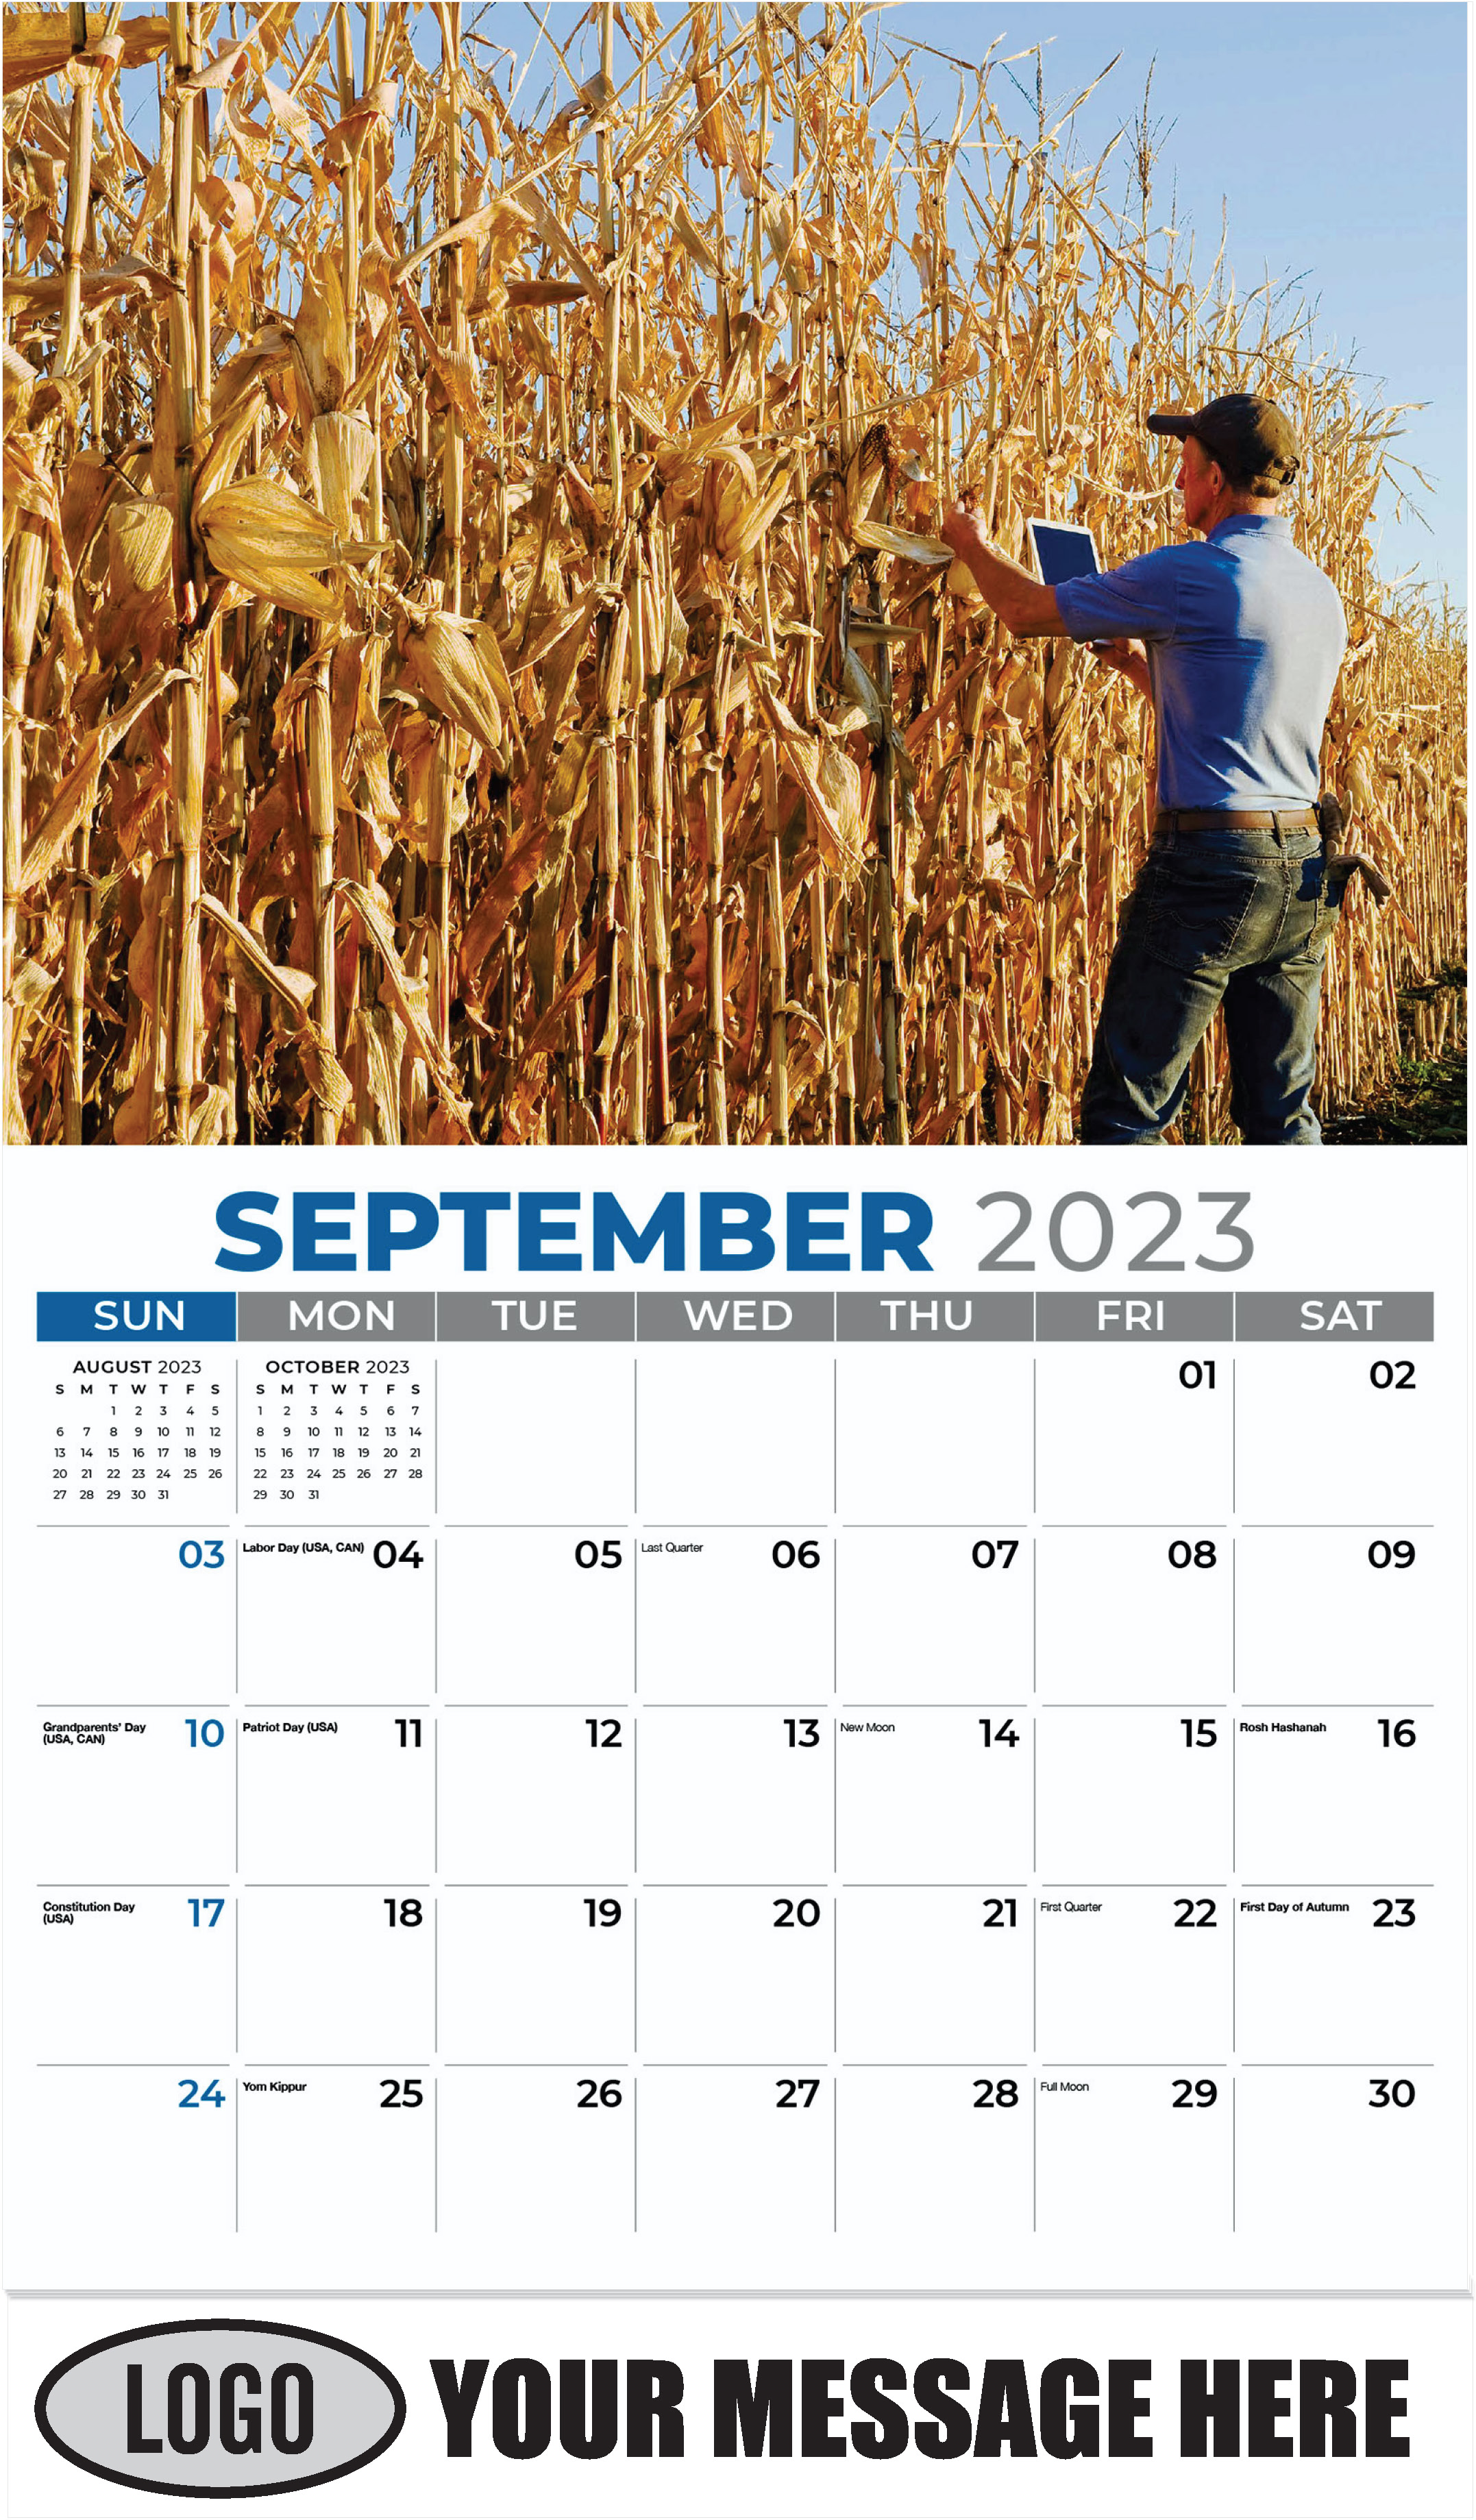 Man checking Wheat - September - Country Spirit 2023 Promotional Calendar